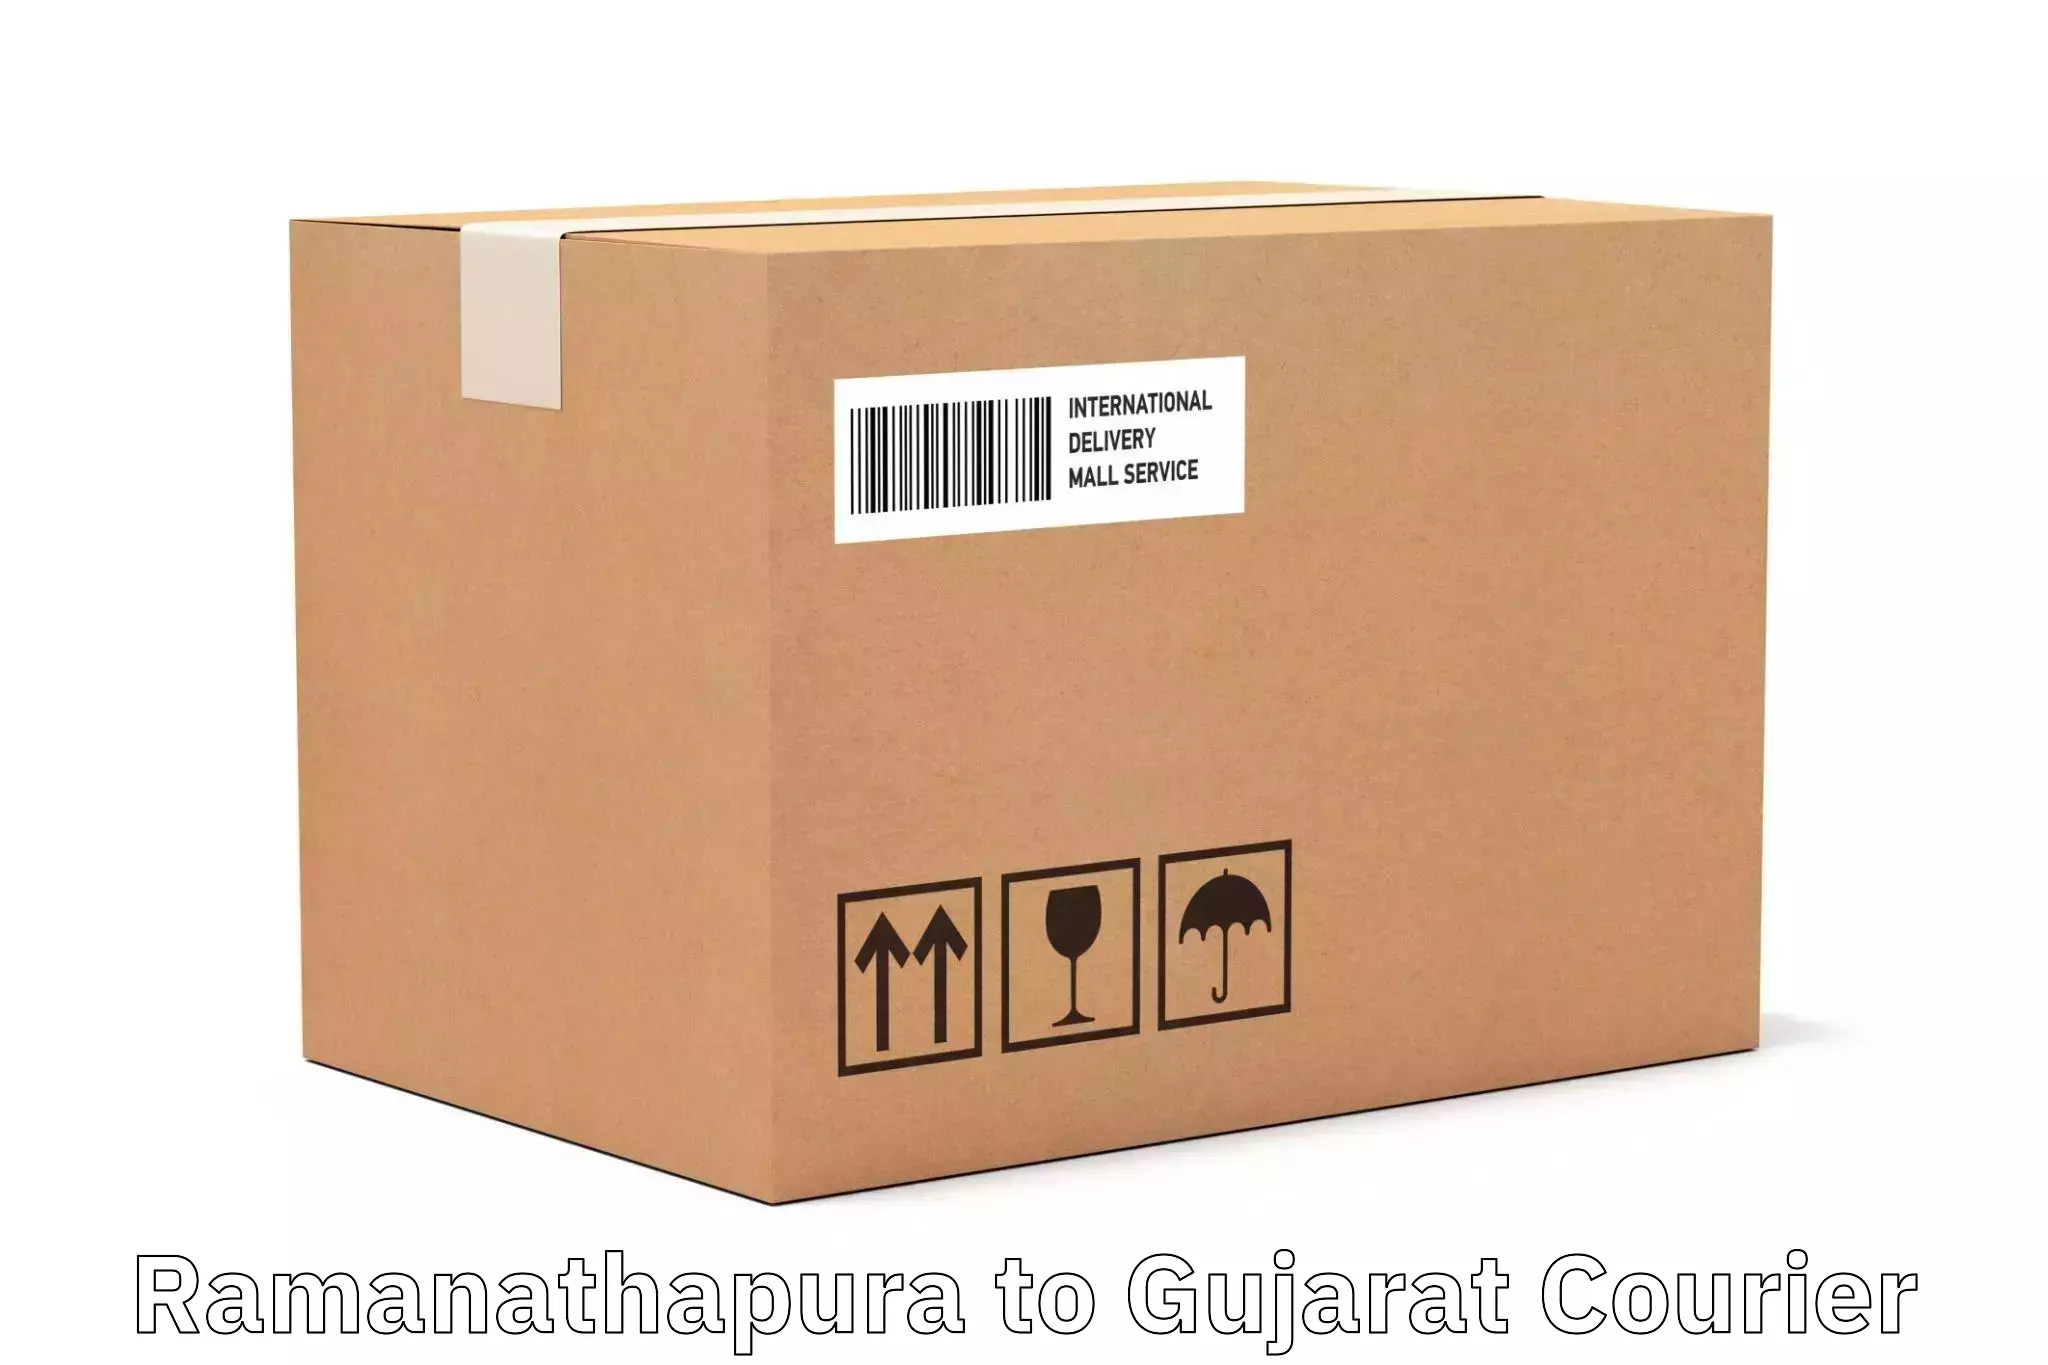 Express delivery capabilities Ramanathapura to Jetpur